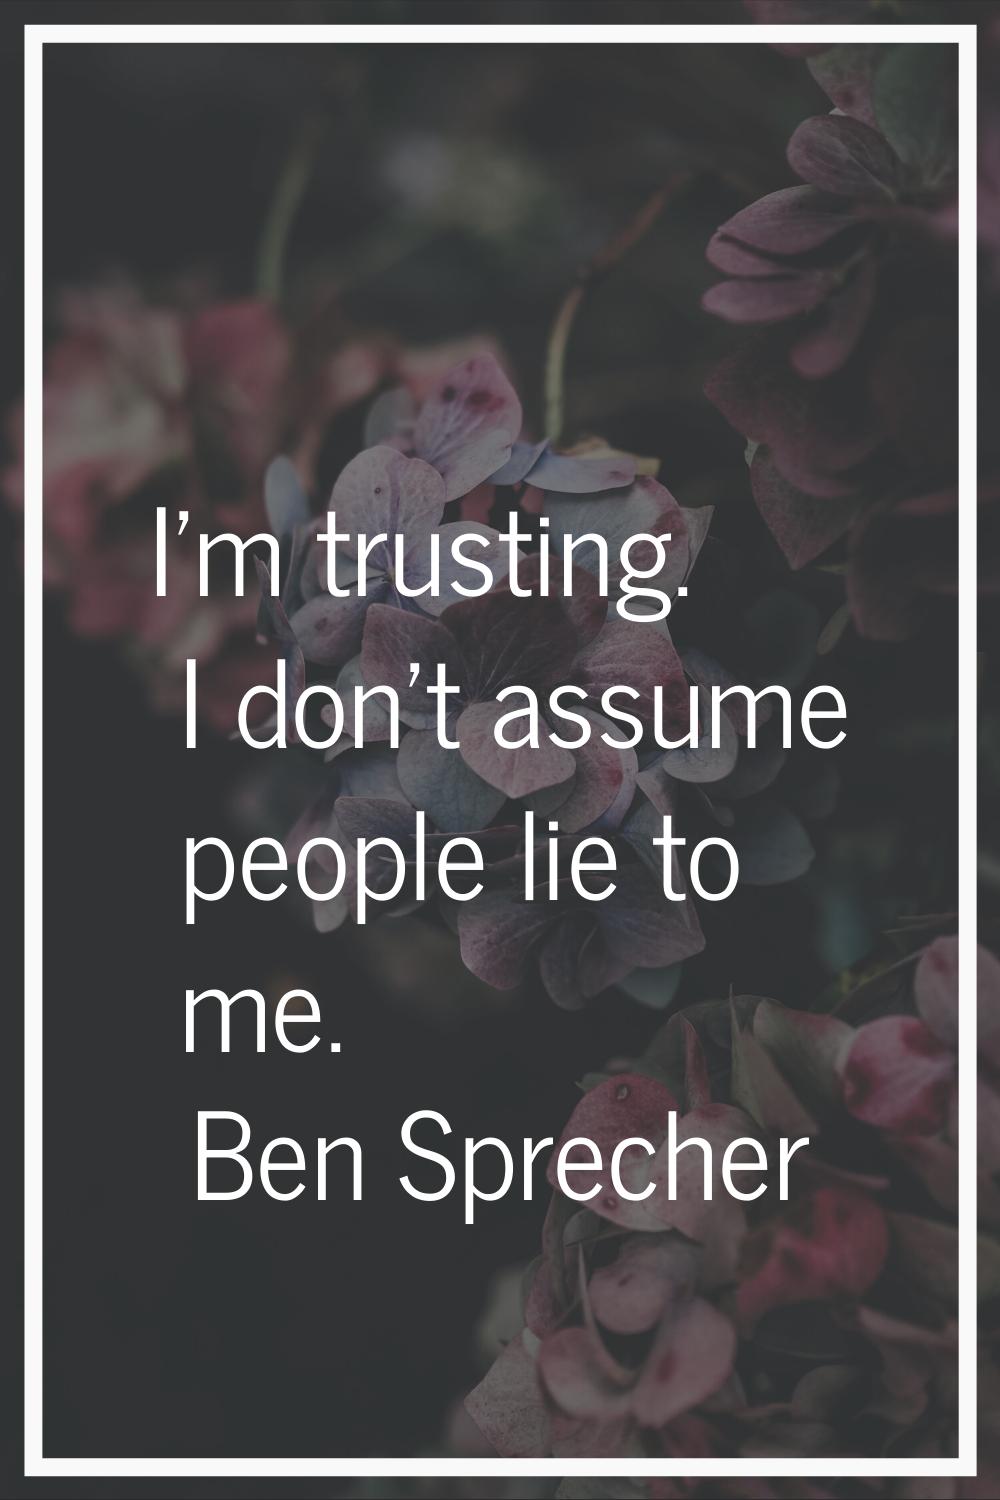 I'm trusting. I don't assume people lie to me.